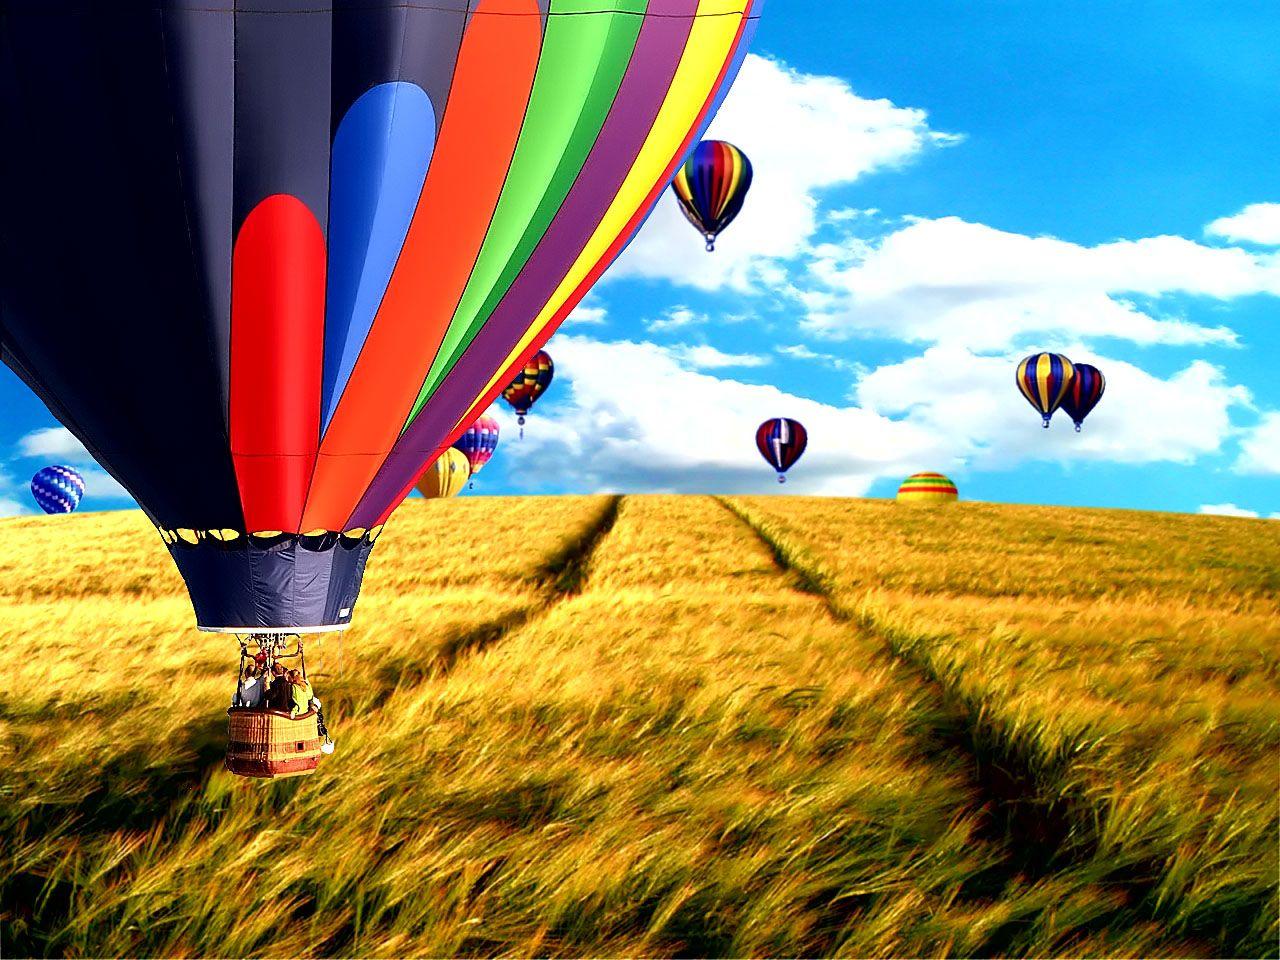 Balloon Ride Wallpaper in jpg format for free download. Art